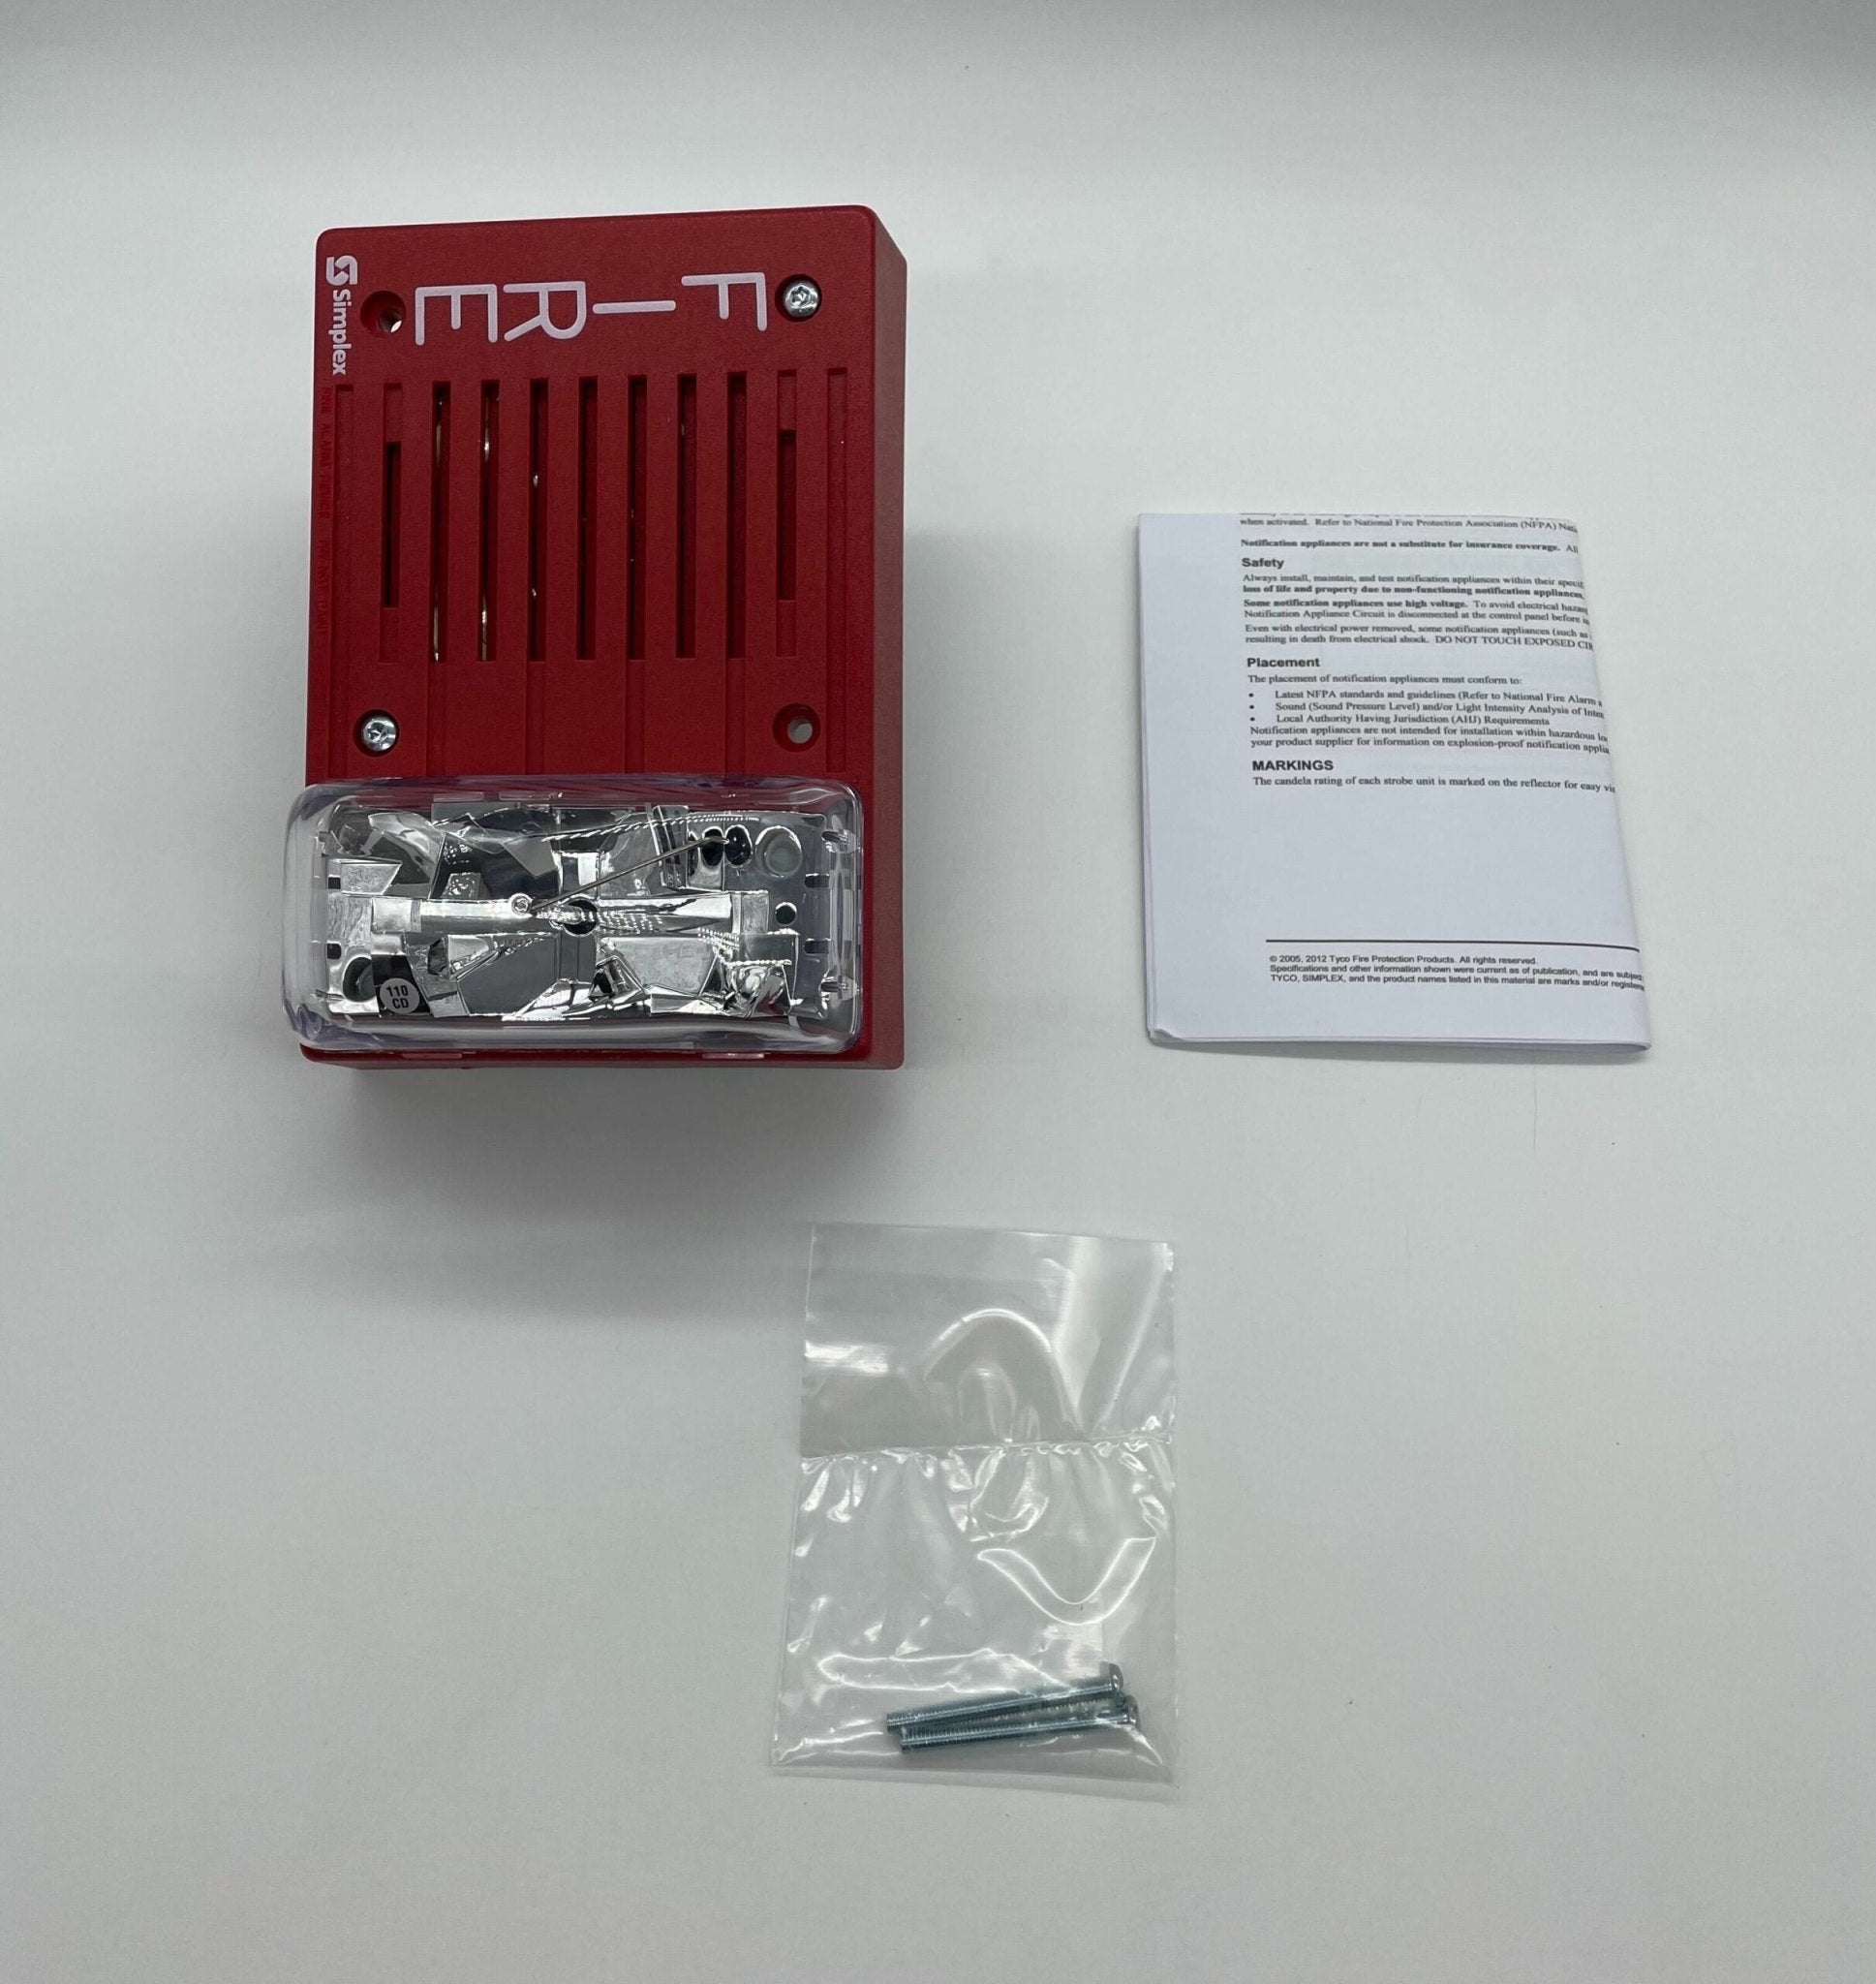 Simplex 4903-9149 - The Fire Alarm Supplier